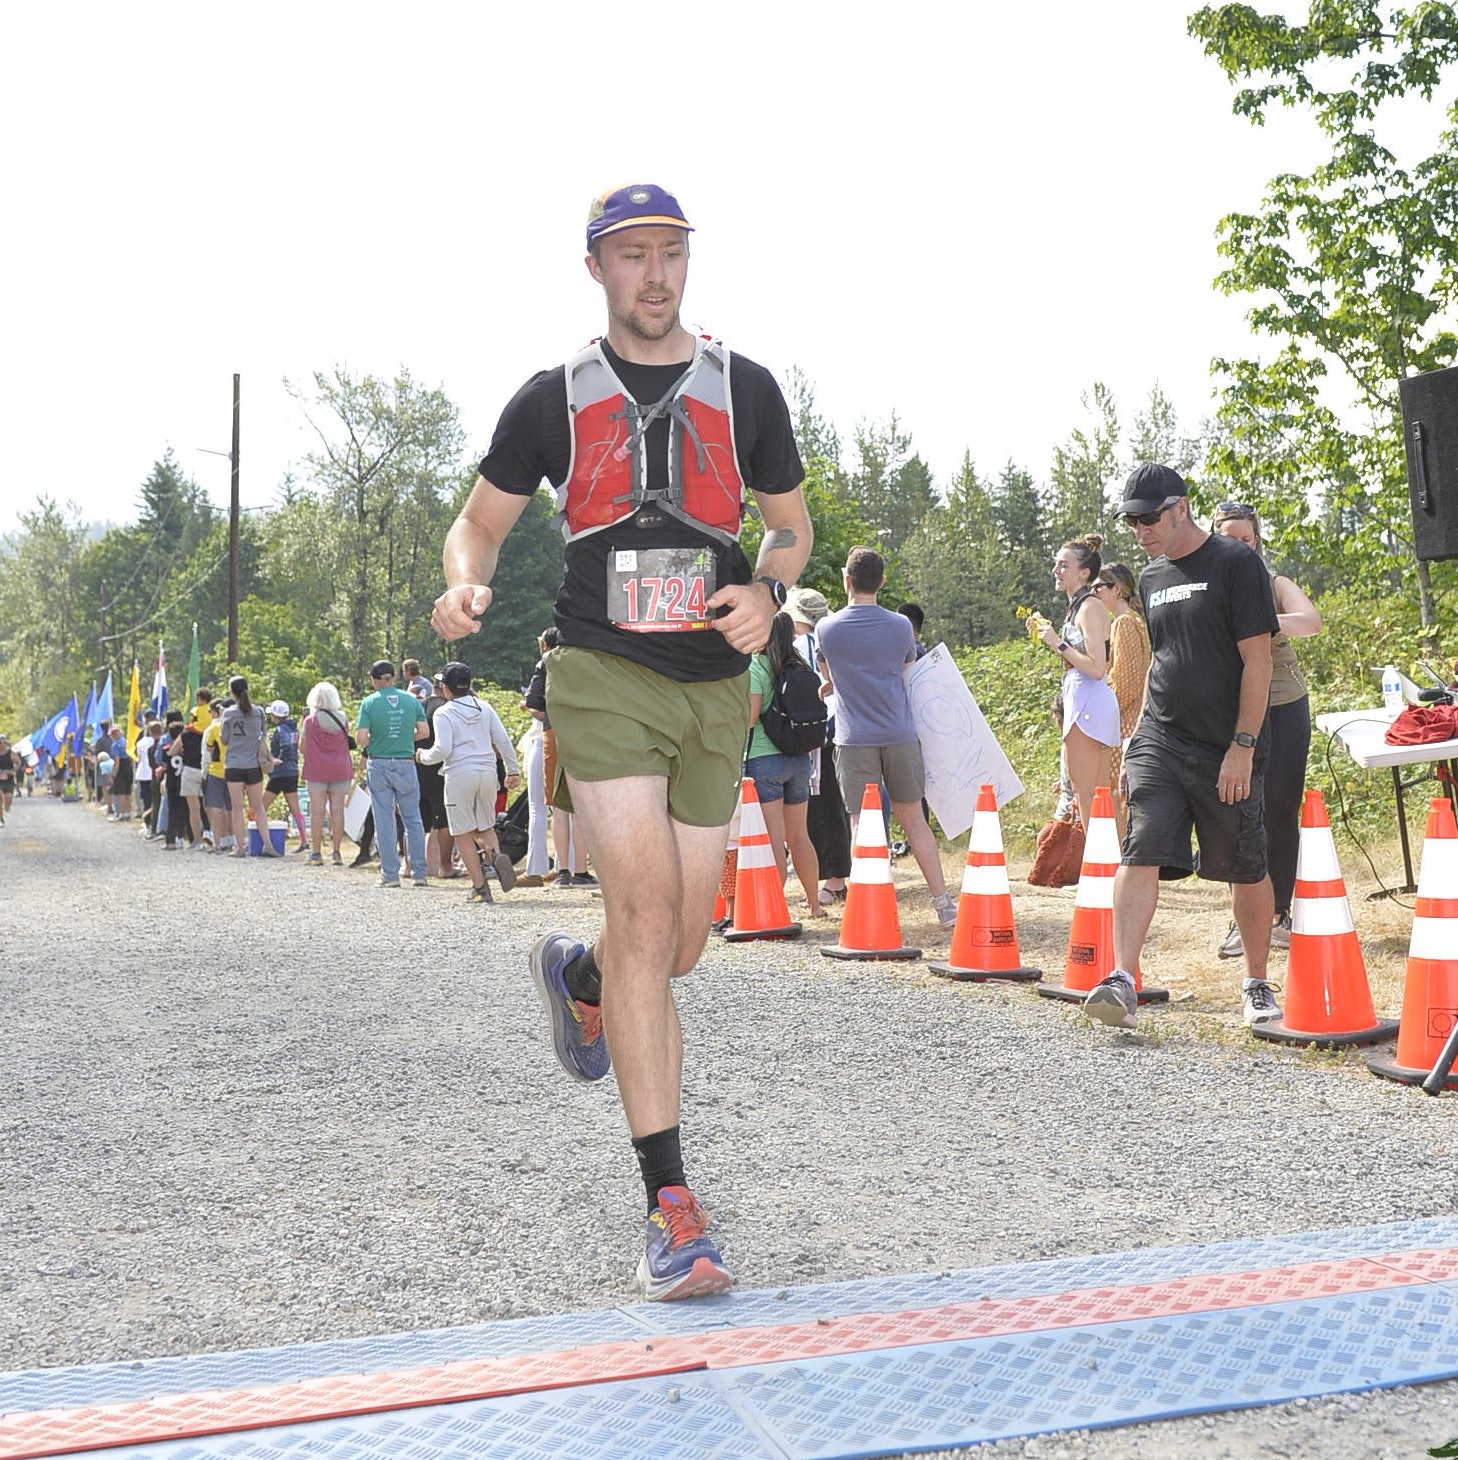 Photo of Matt running across a finish line